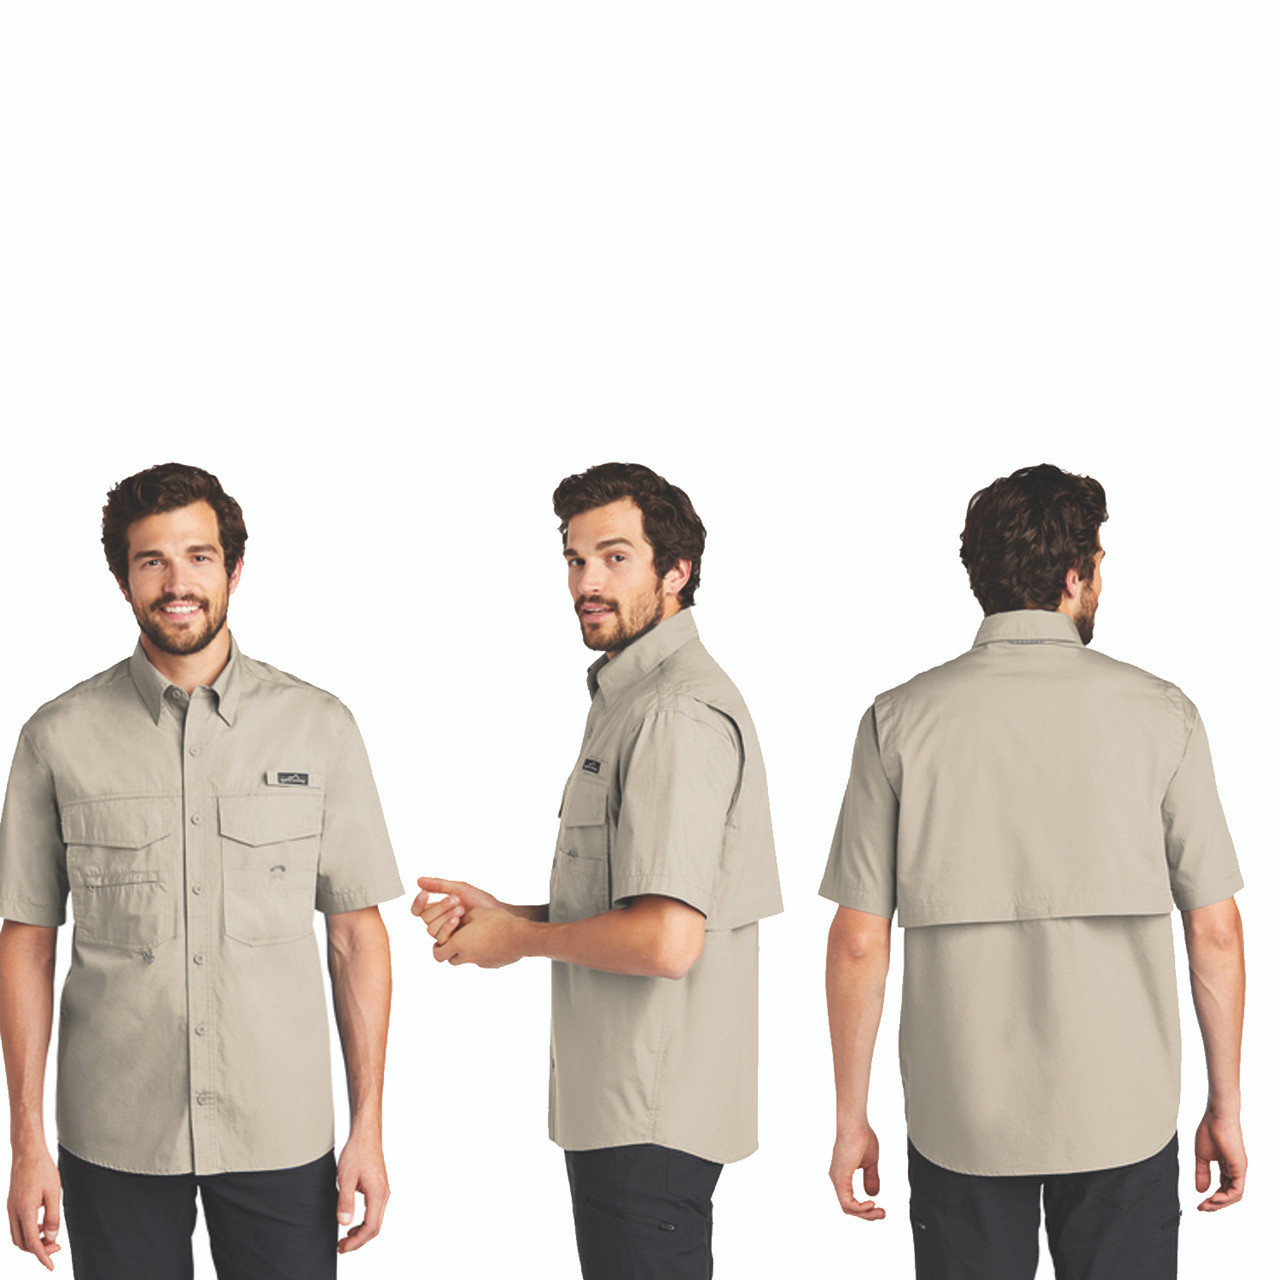 100% Cotton Work Shirts - Premium Uniforms